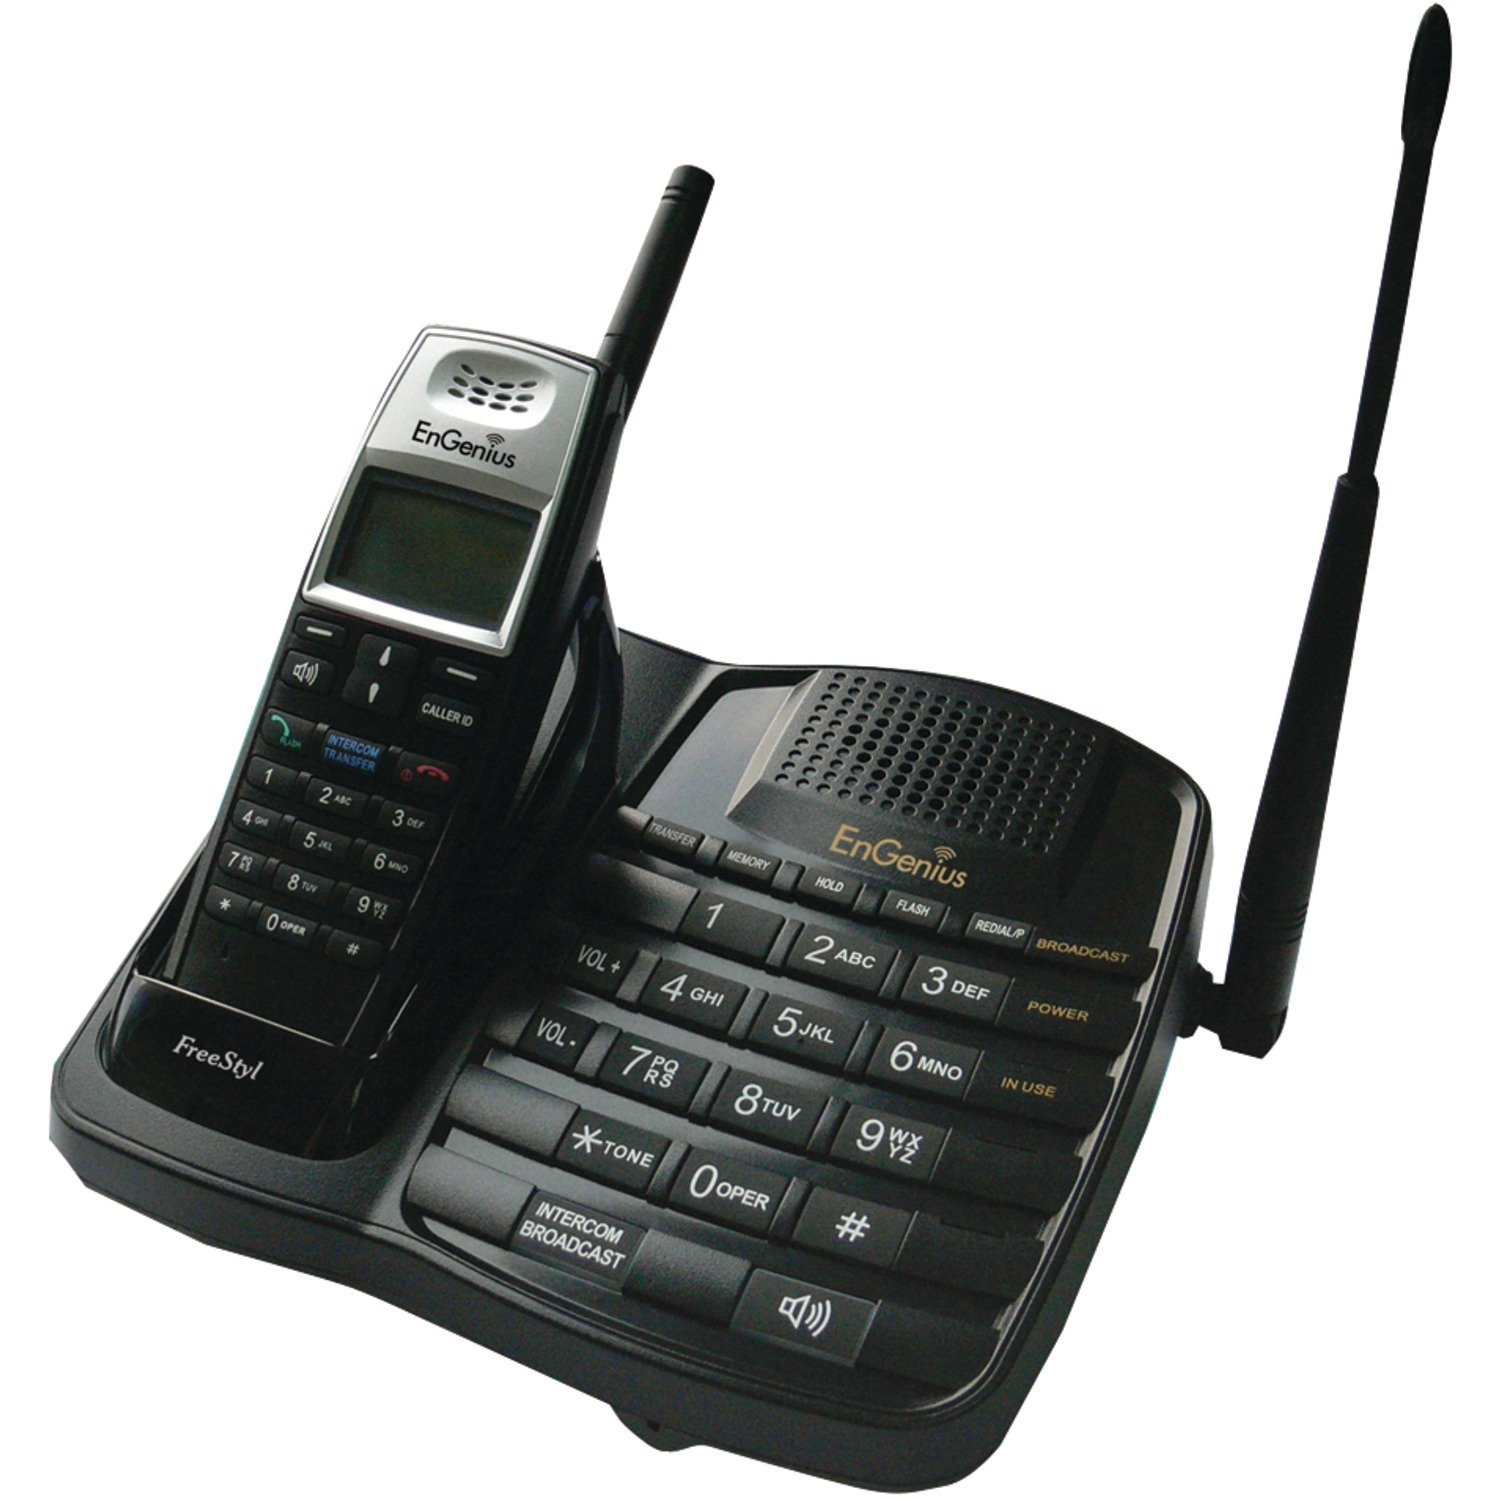 EnGenius نظام الهاتف اللاسلكي FreeStyl1 Extreme Range Scalable اللاسلكي مع سماعة واحدة واتصال داخلي ثنائي الاتجاه